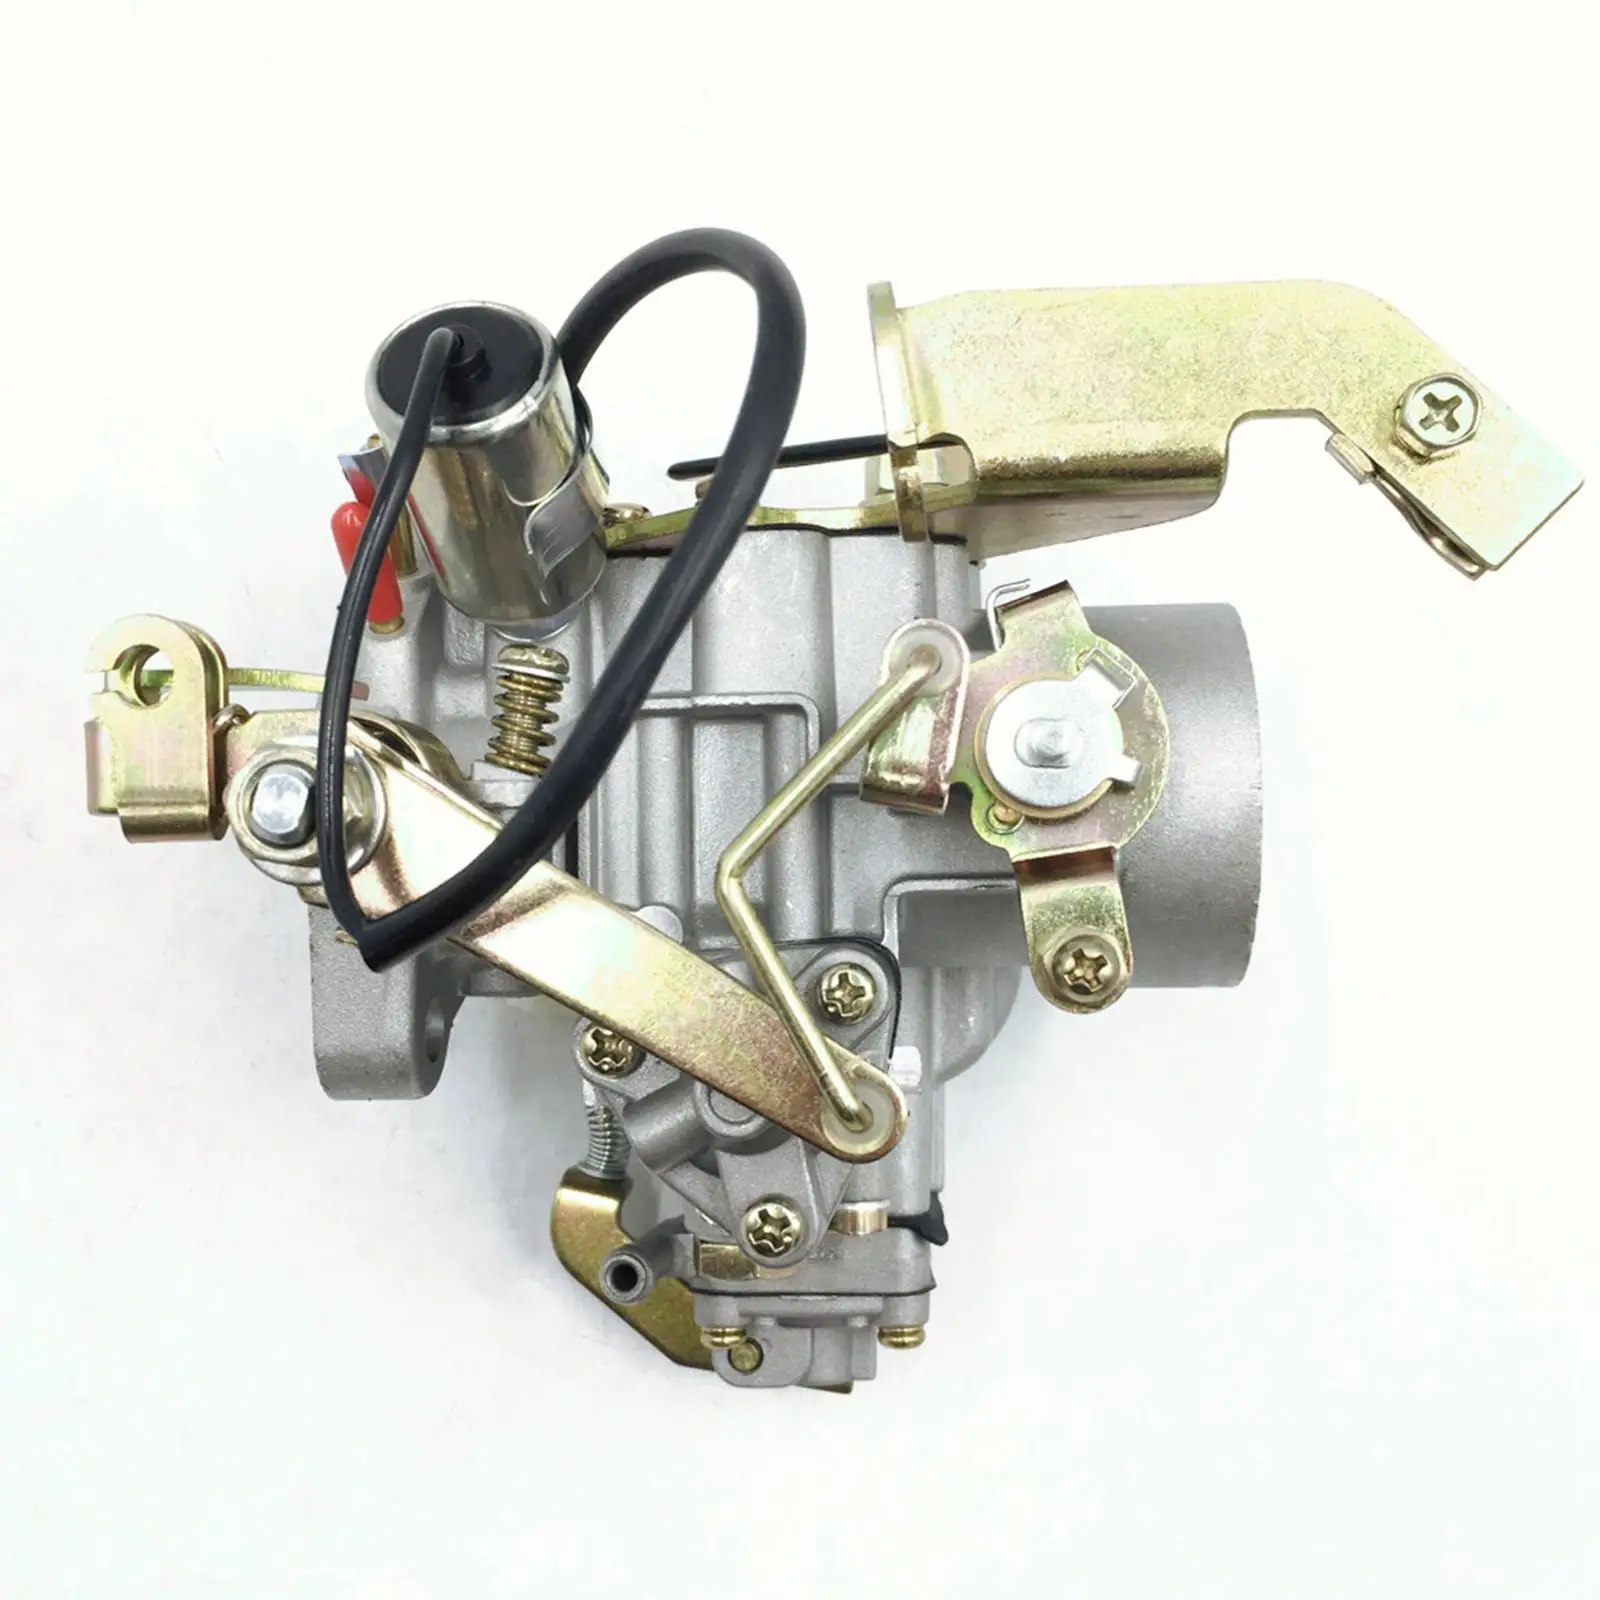 

Csh101E/462 Carburetor Carb Replace Parts for 650cc-800cc Go Karts Buggy Easy Installation Durable Premium